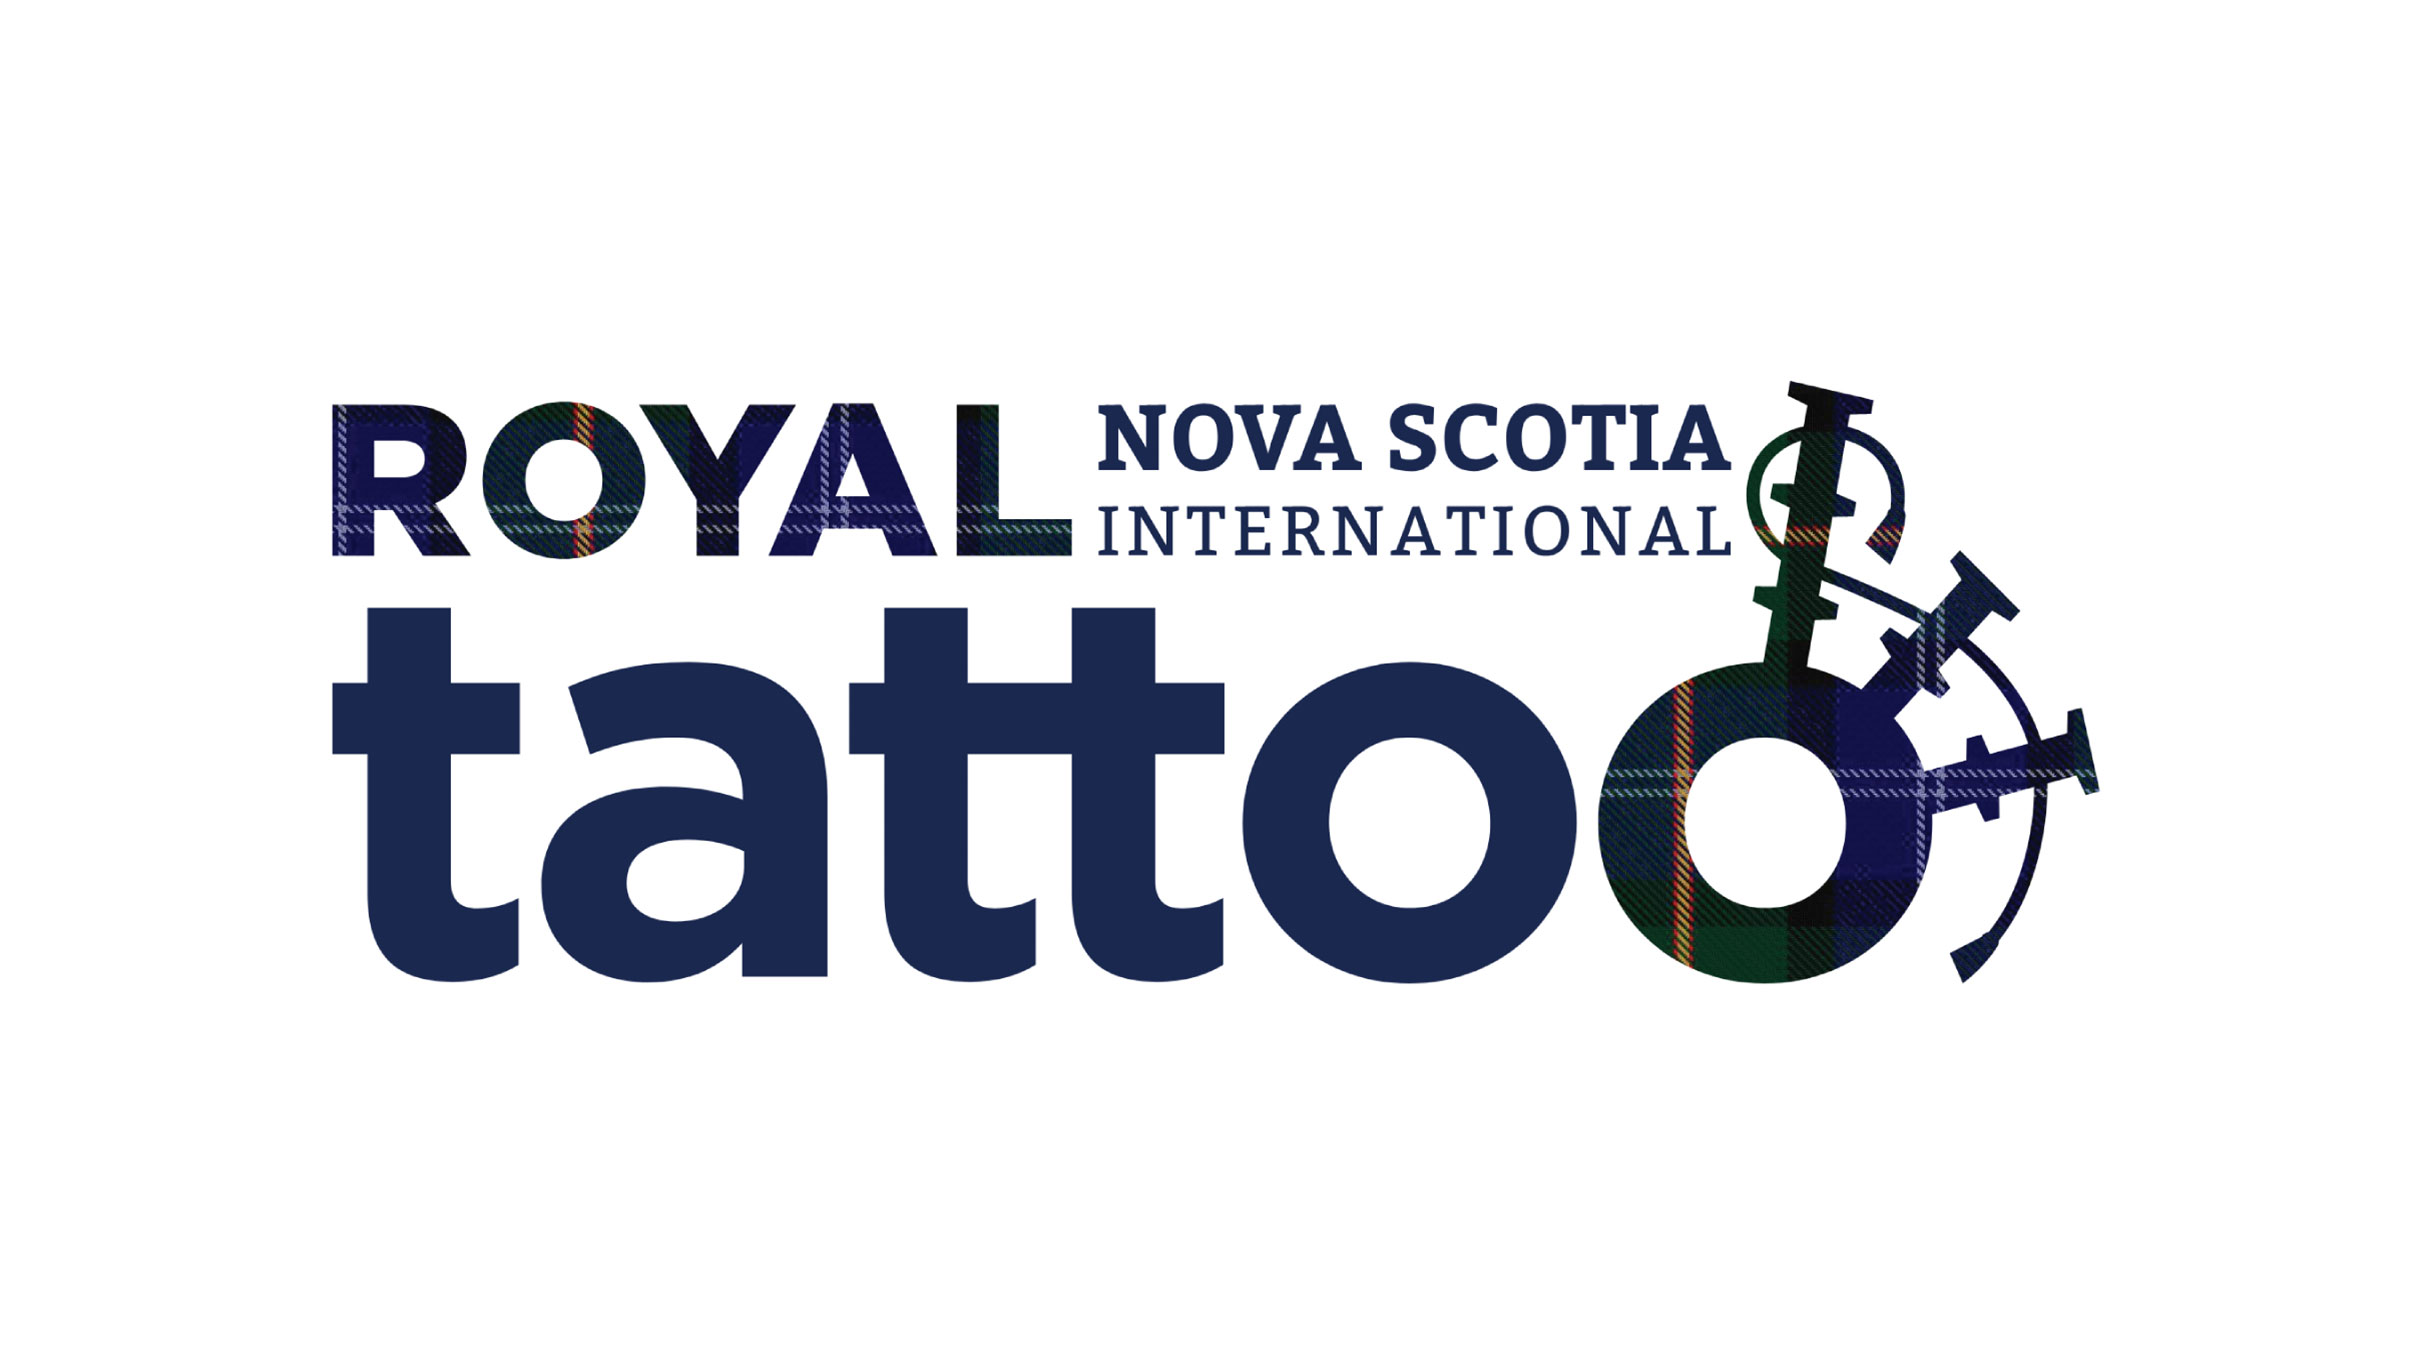 Royal Nova Scotia International Tattoo Backstage Tour